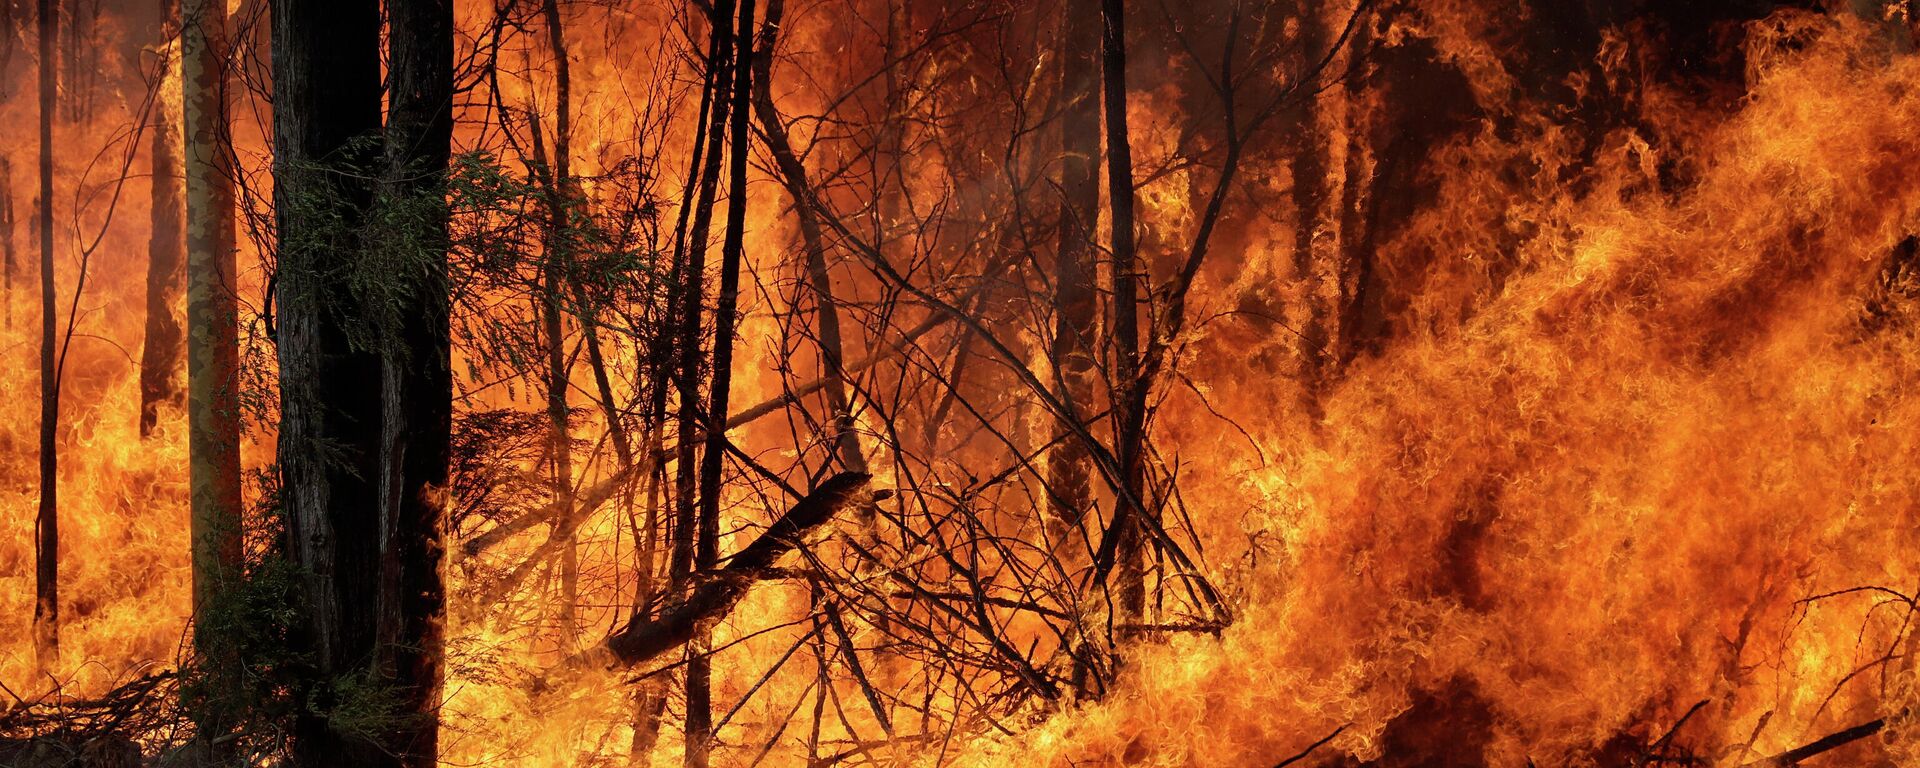 Incendios forestales en Australia - Sputnik Mundo, 1920, 12.04.2021